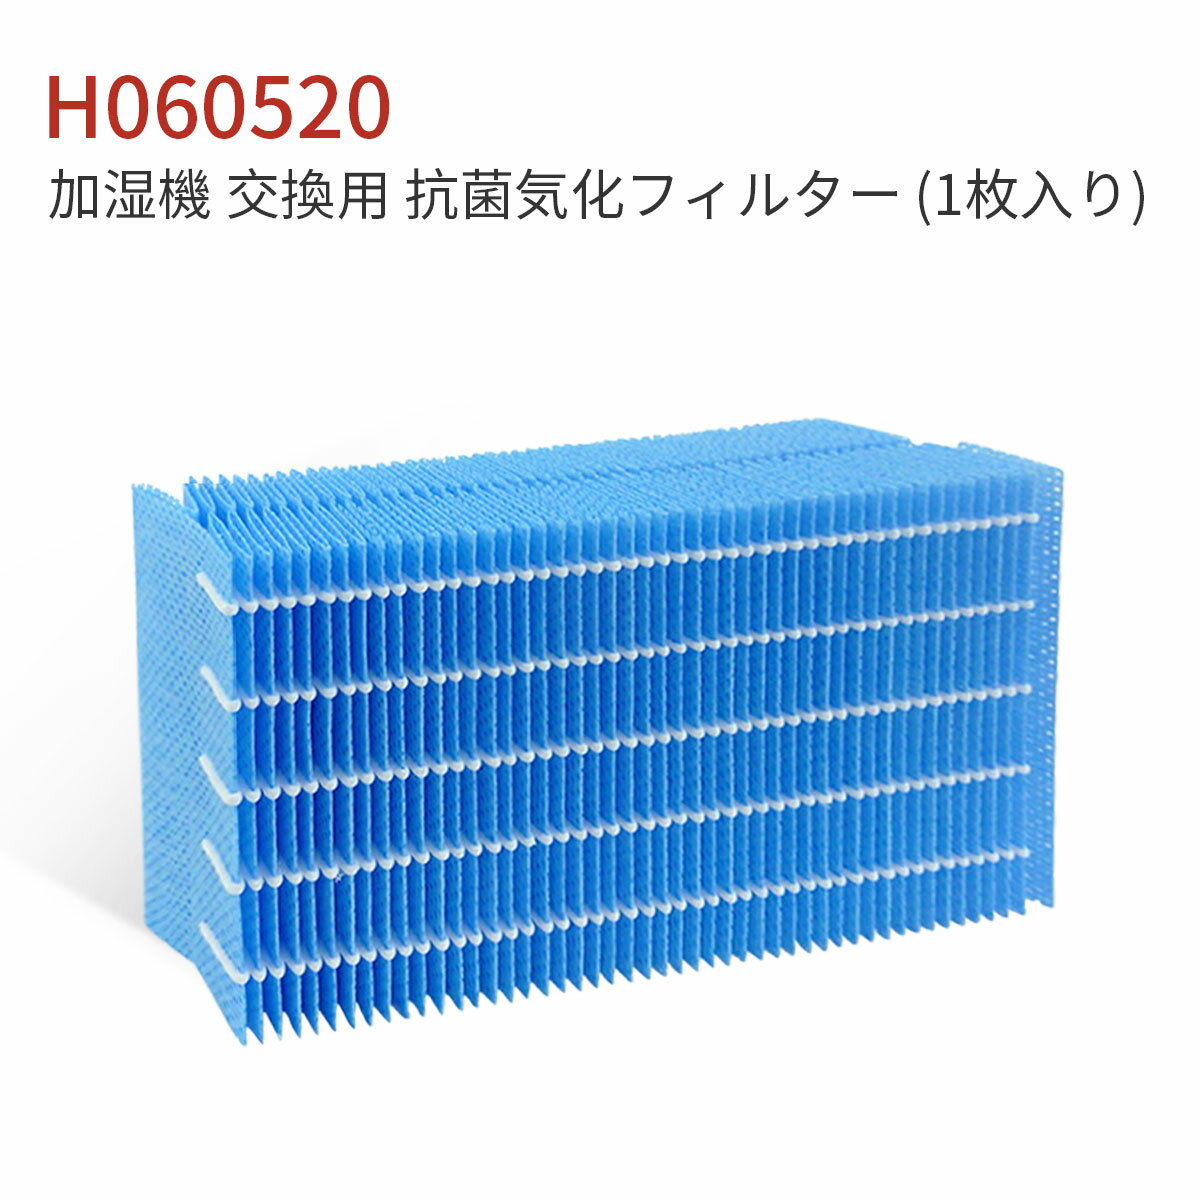 H060520 ダイニチ 加湿機 抗菌気化フィルター h060520 h060522 加湿器 フィルター HD-LX1019 HD-LX1020 HD-LX1219 HD-LX1220 交換用加湿フィルター（互換品/1枚入り）